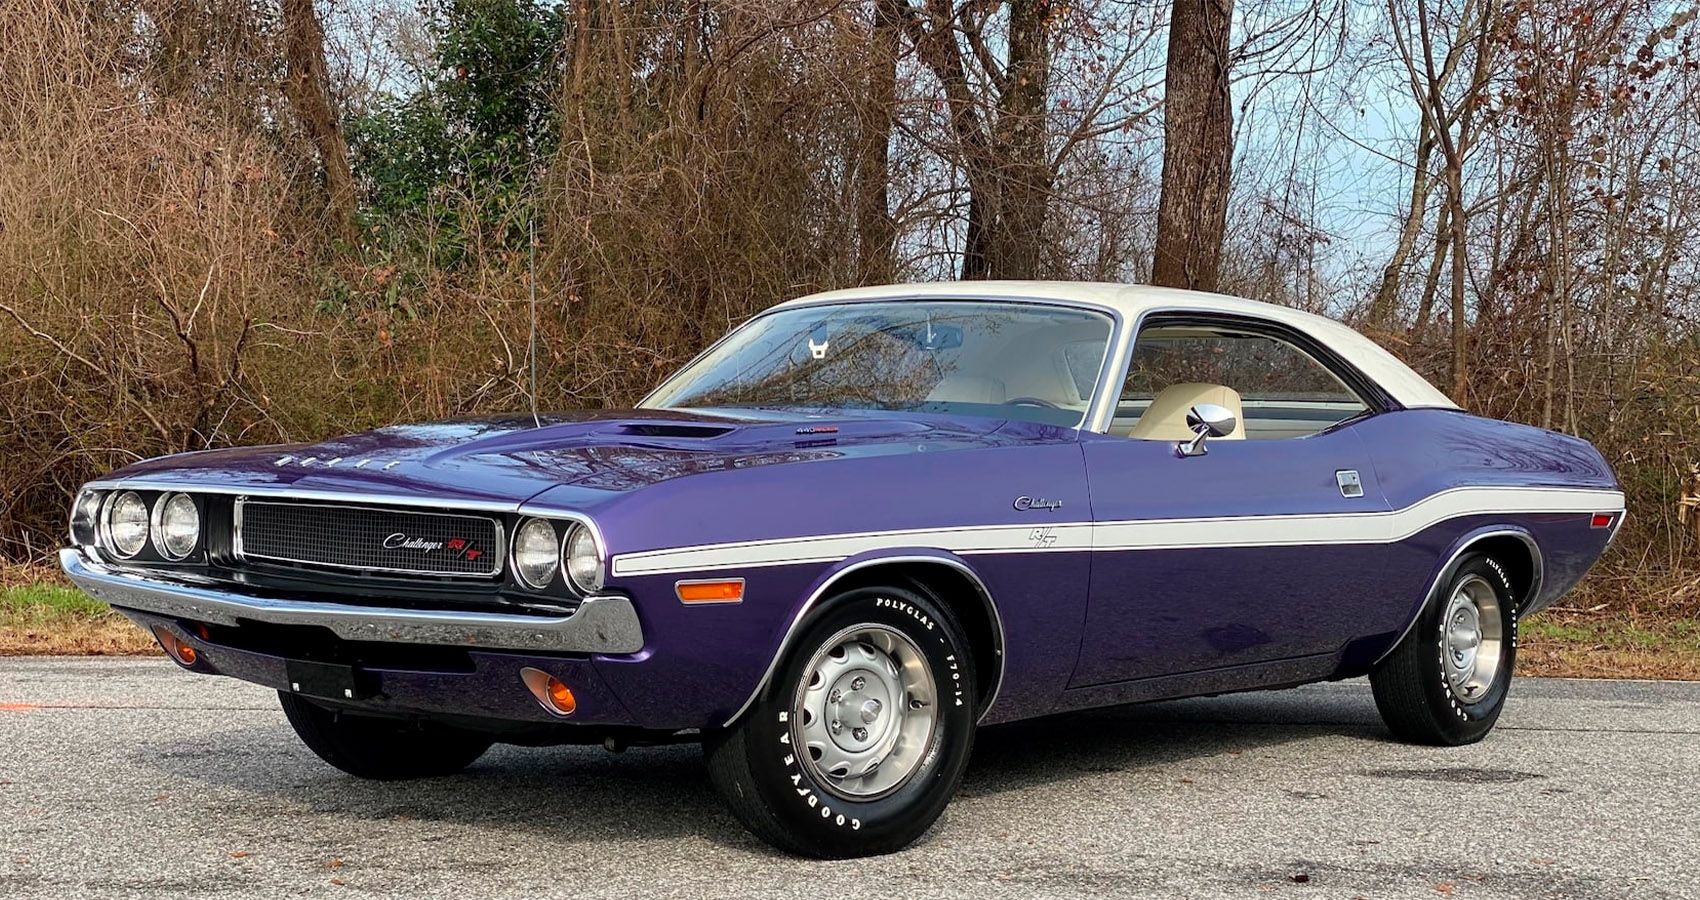 1970 Dodge Challenger R:T in purple